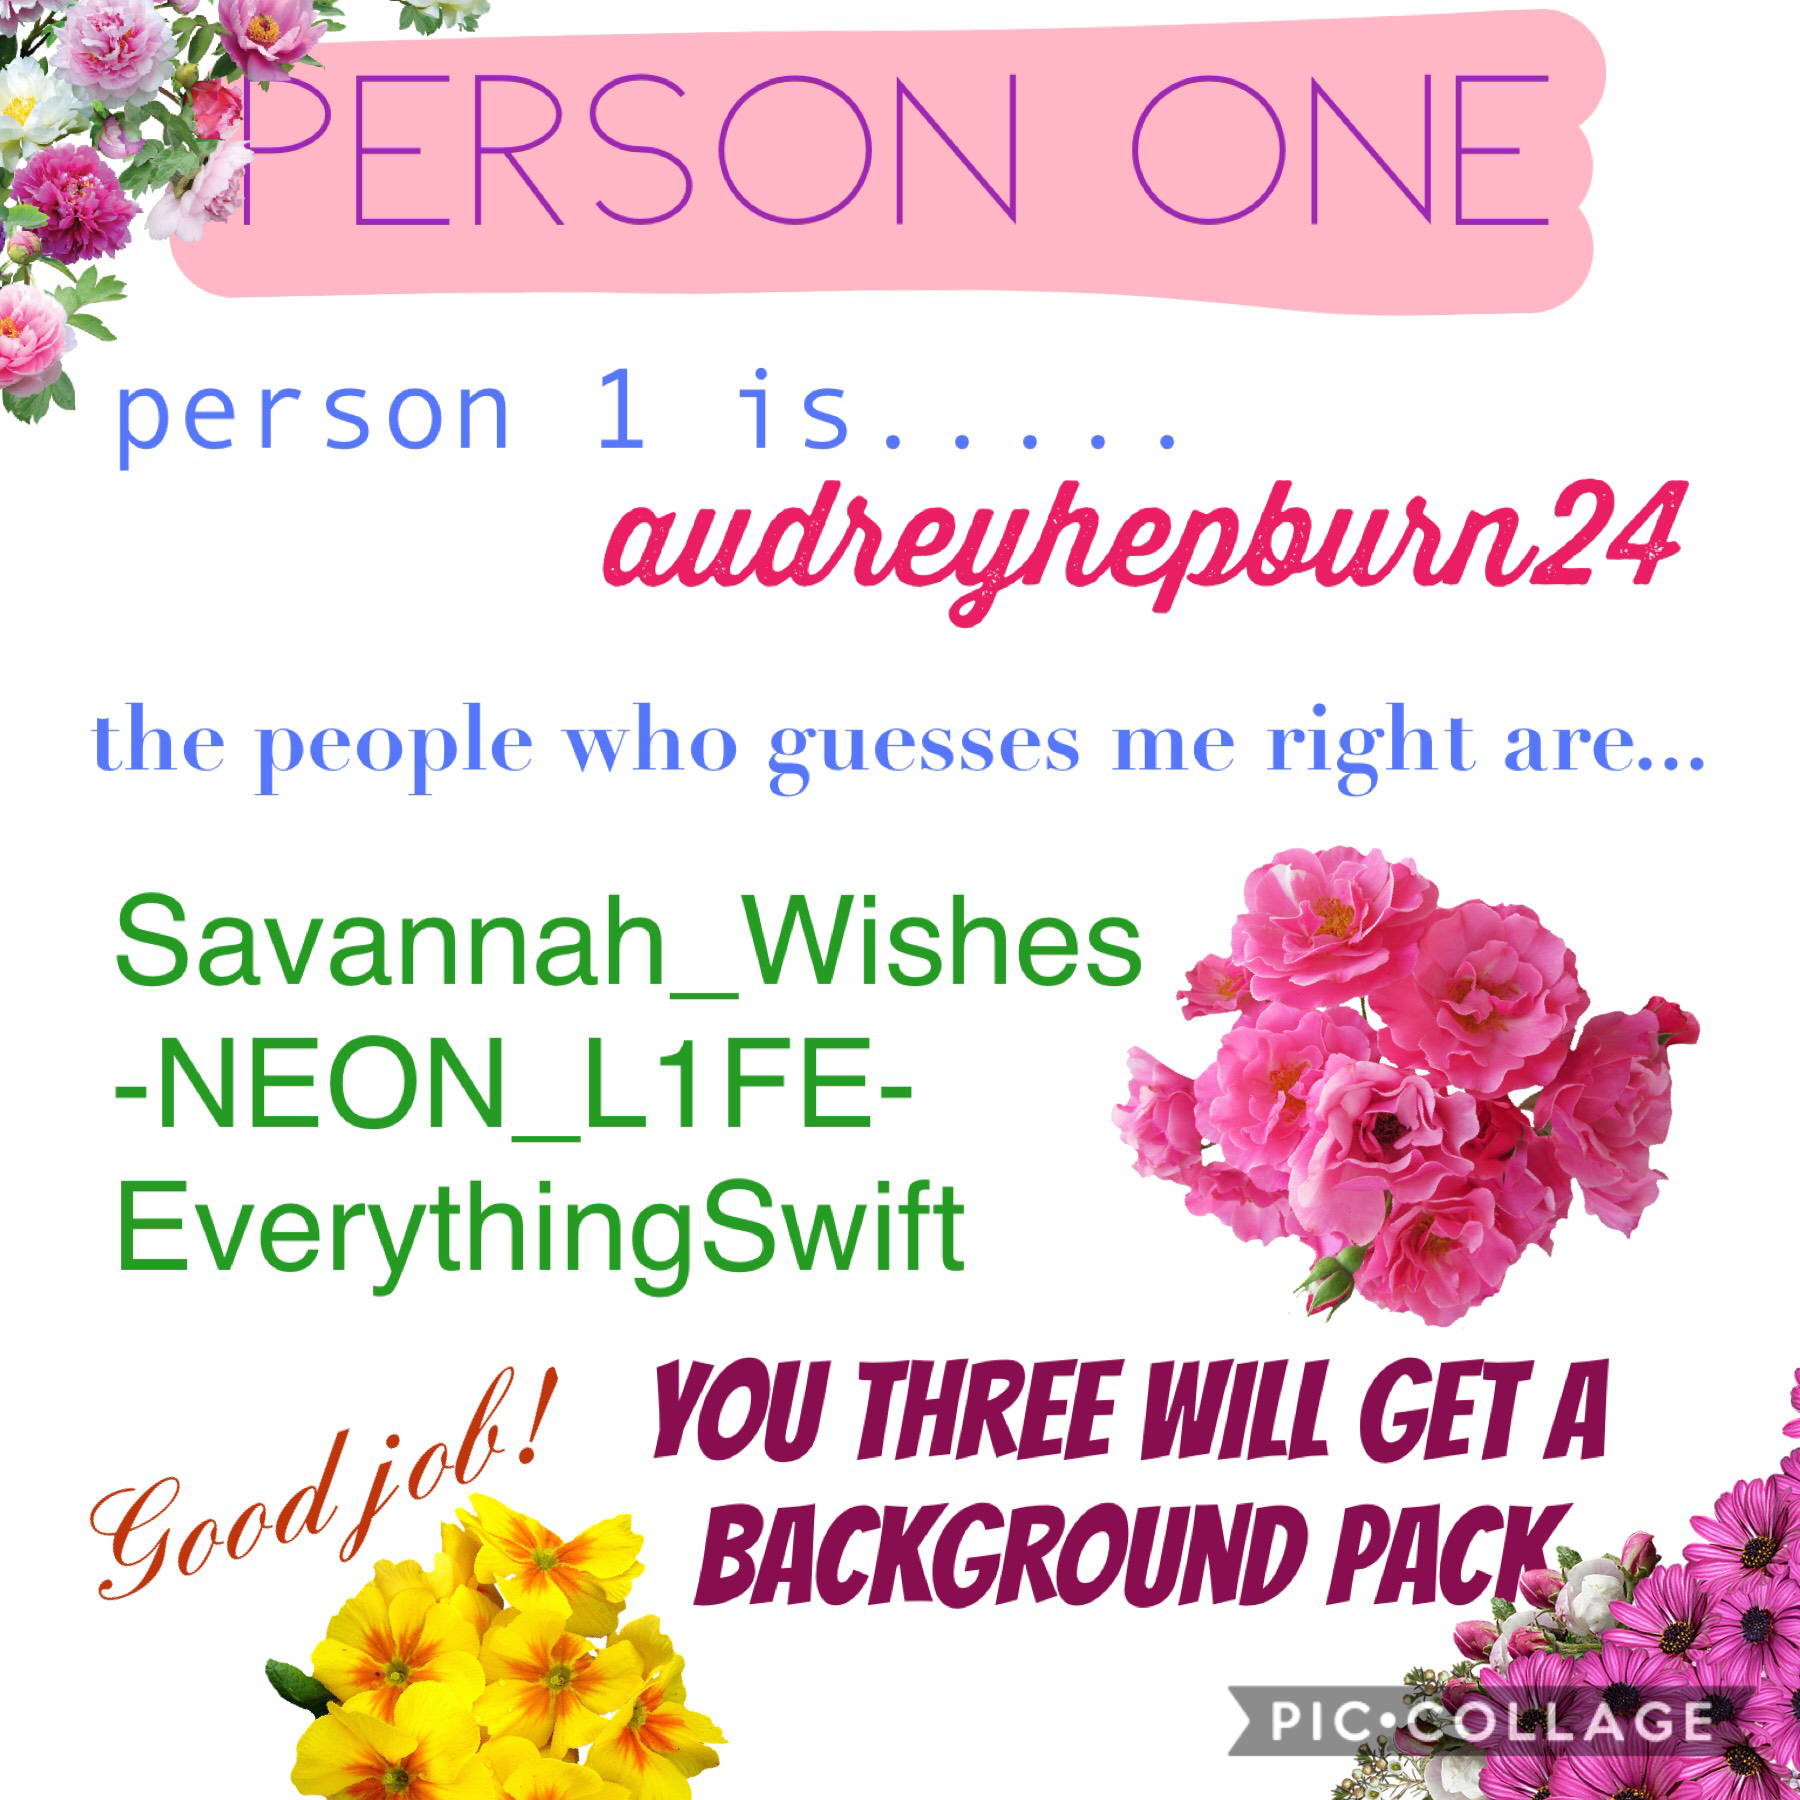 Person 1 is..... (Tap)
Me!!!!!!! audreyhepburn24 💞💖